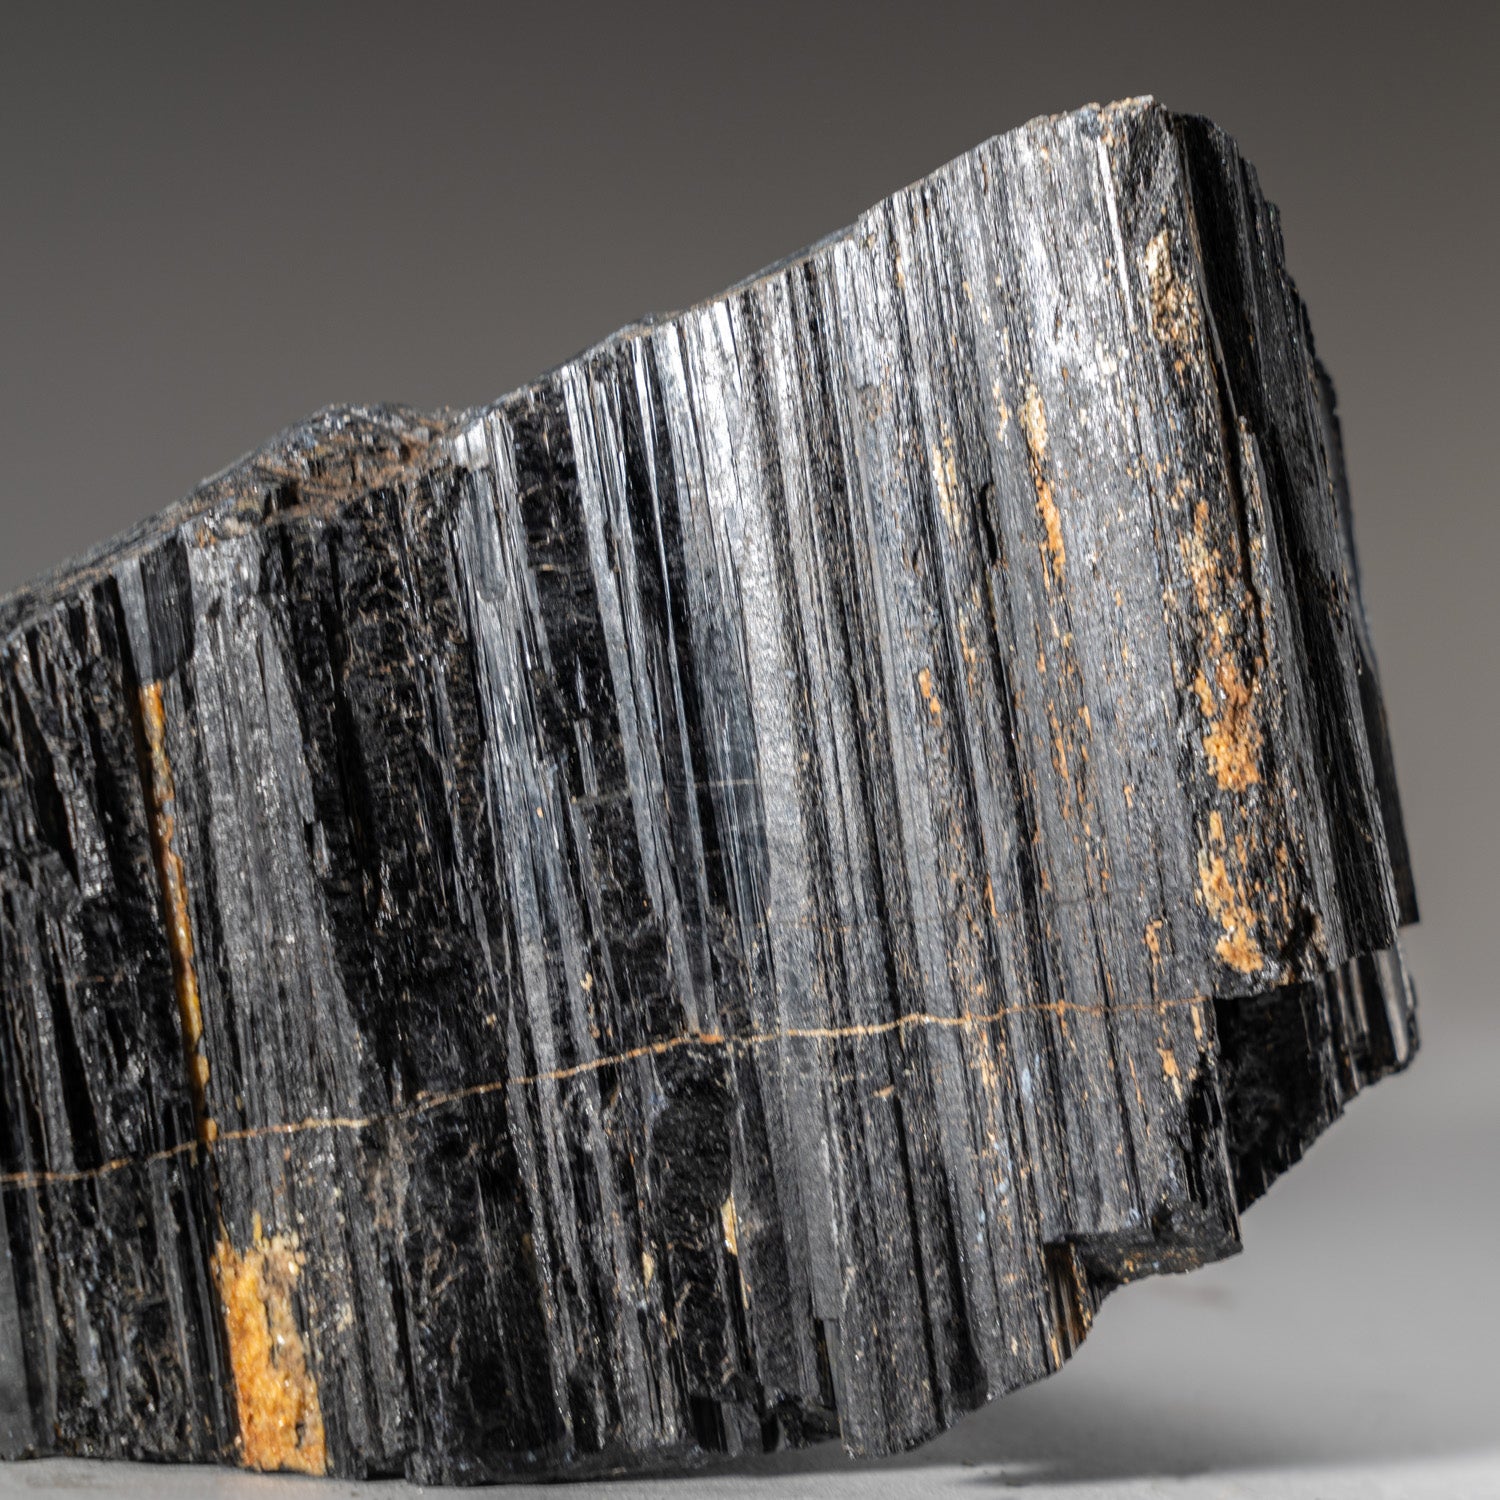 Genuine Black Tourmaline Crystal From Brazil (3.1 lbs)